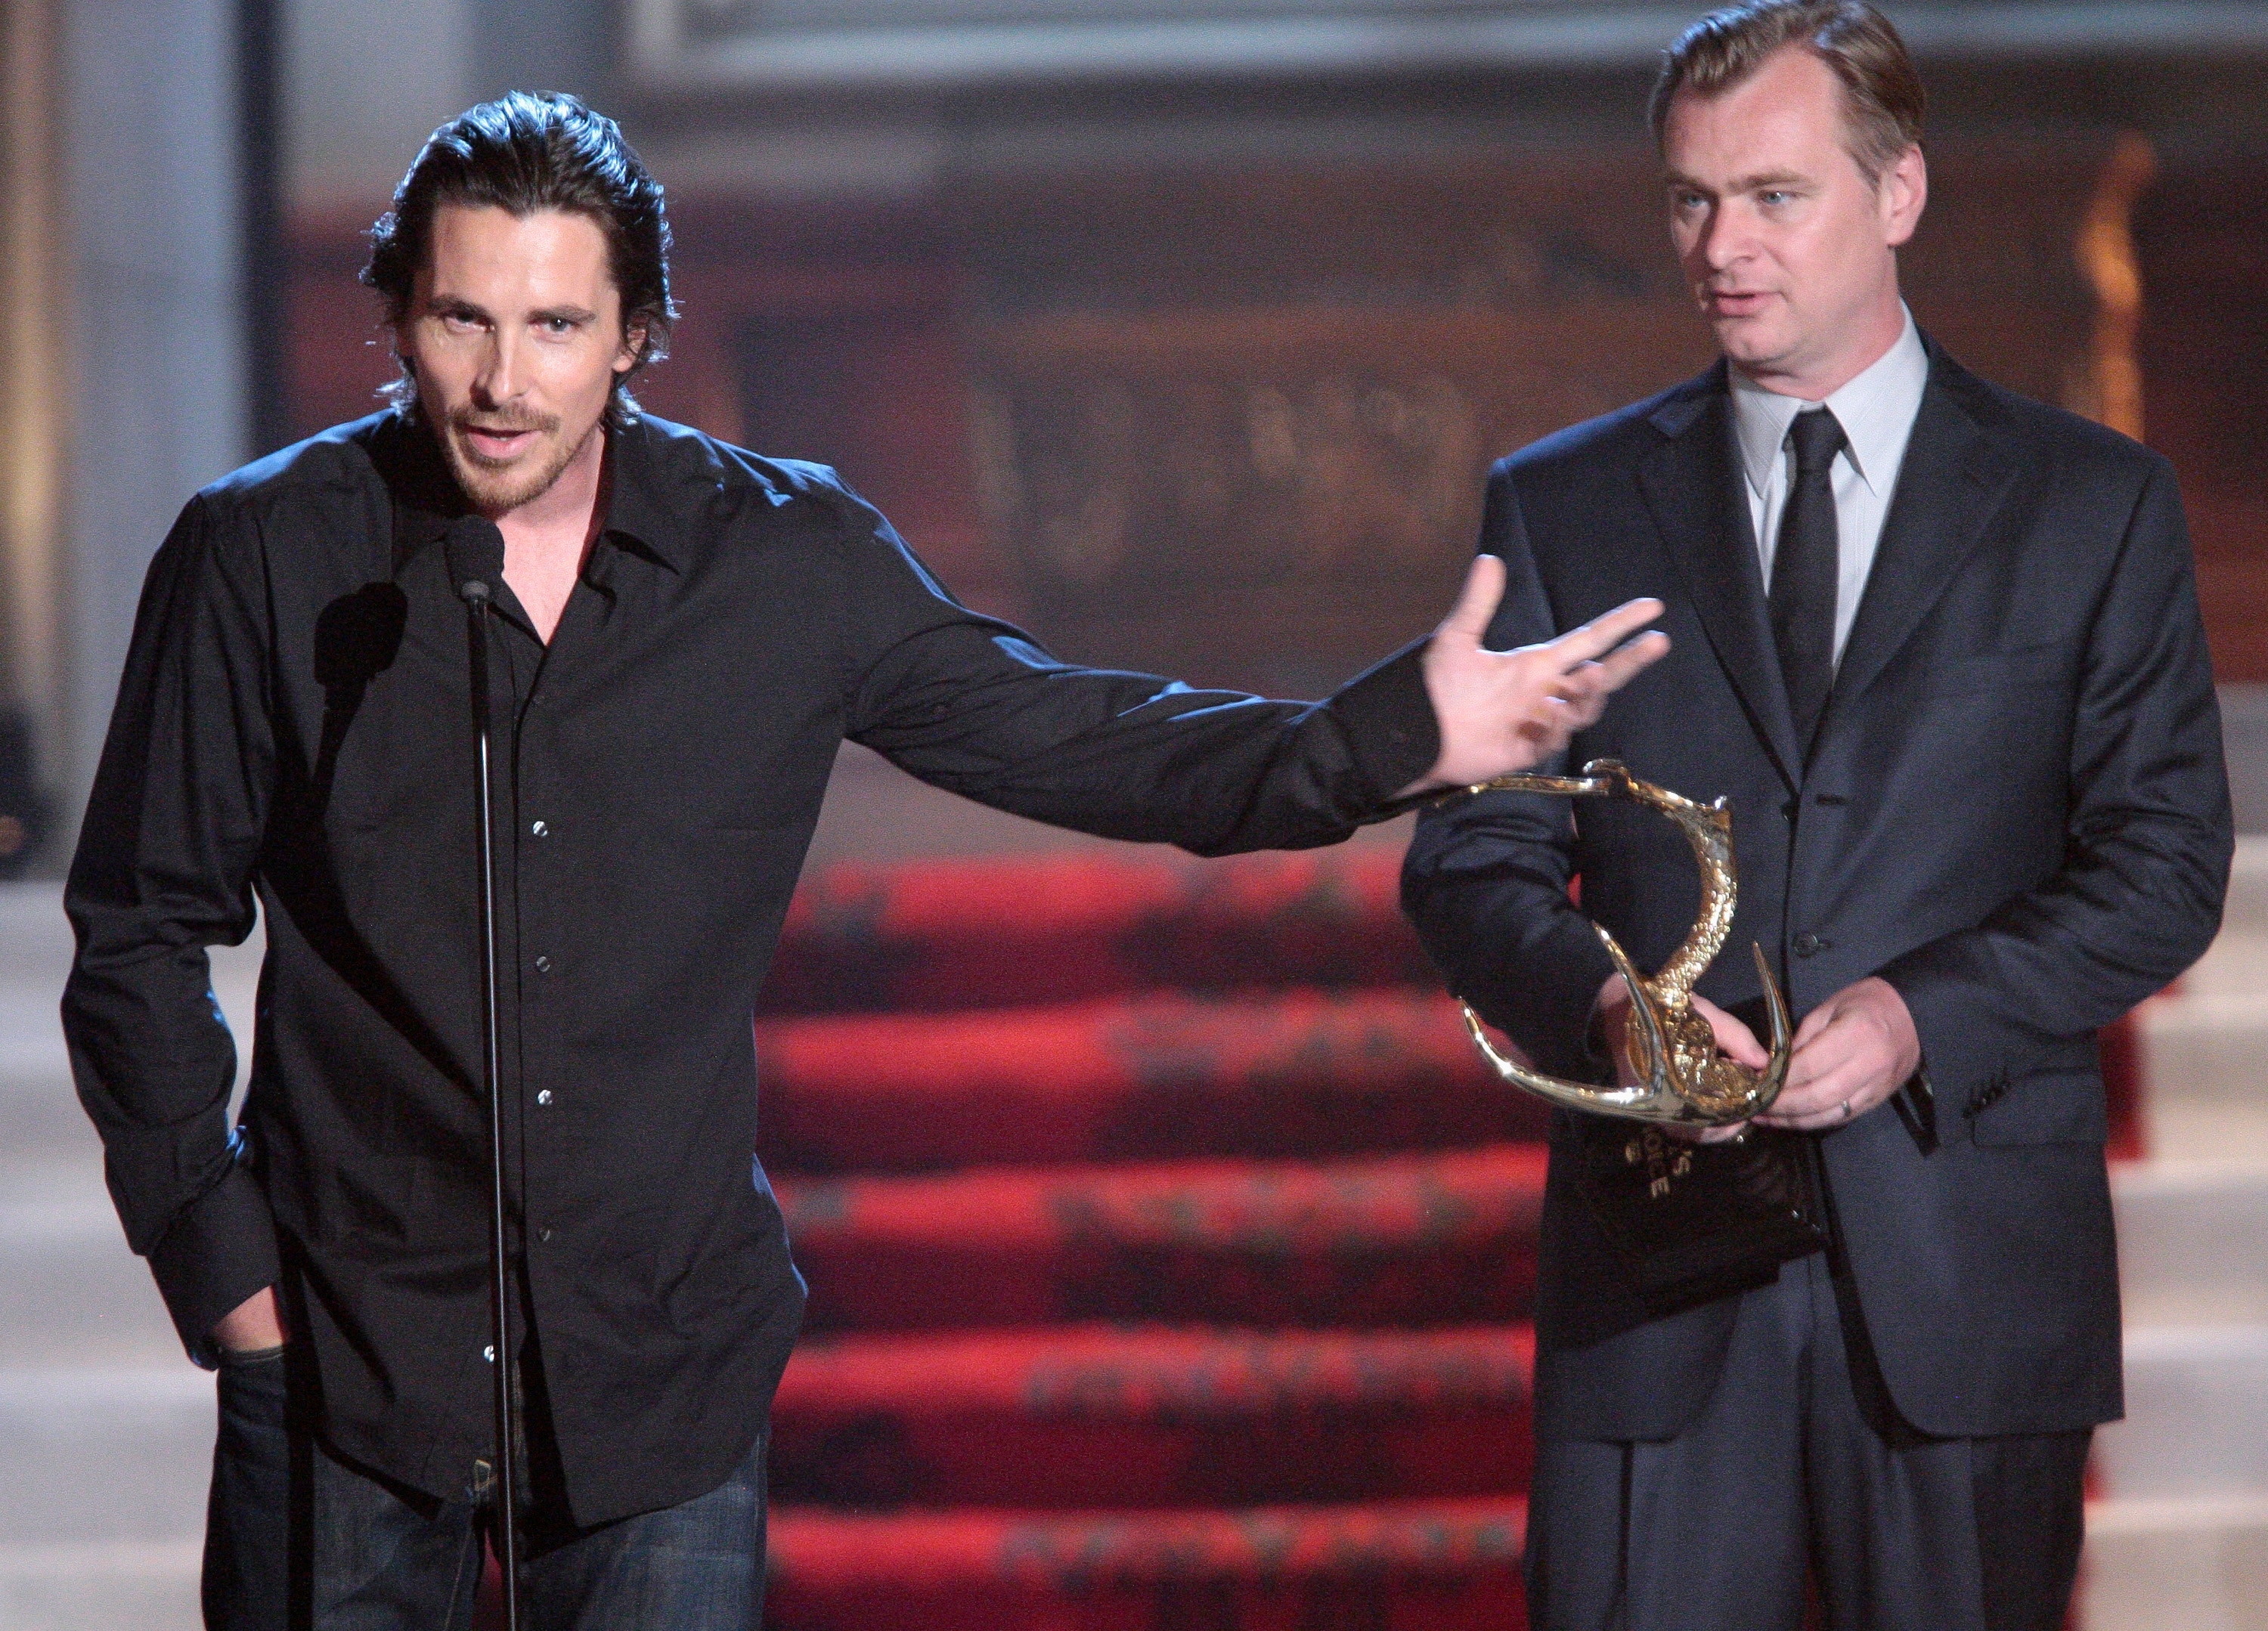 Christian Bale gets emotional remembering Heath Ledger at the MTV Movie Awards